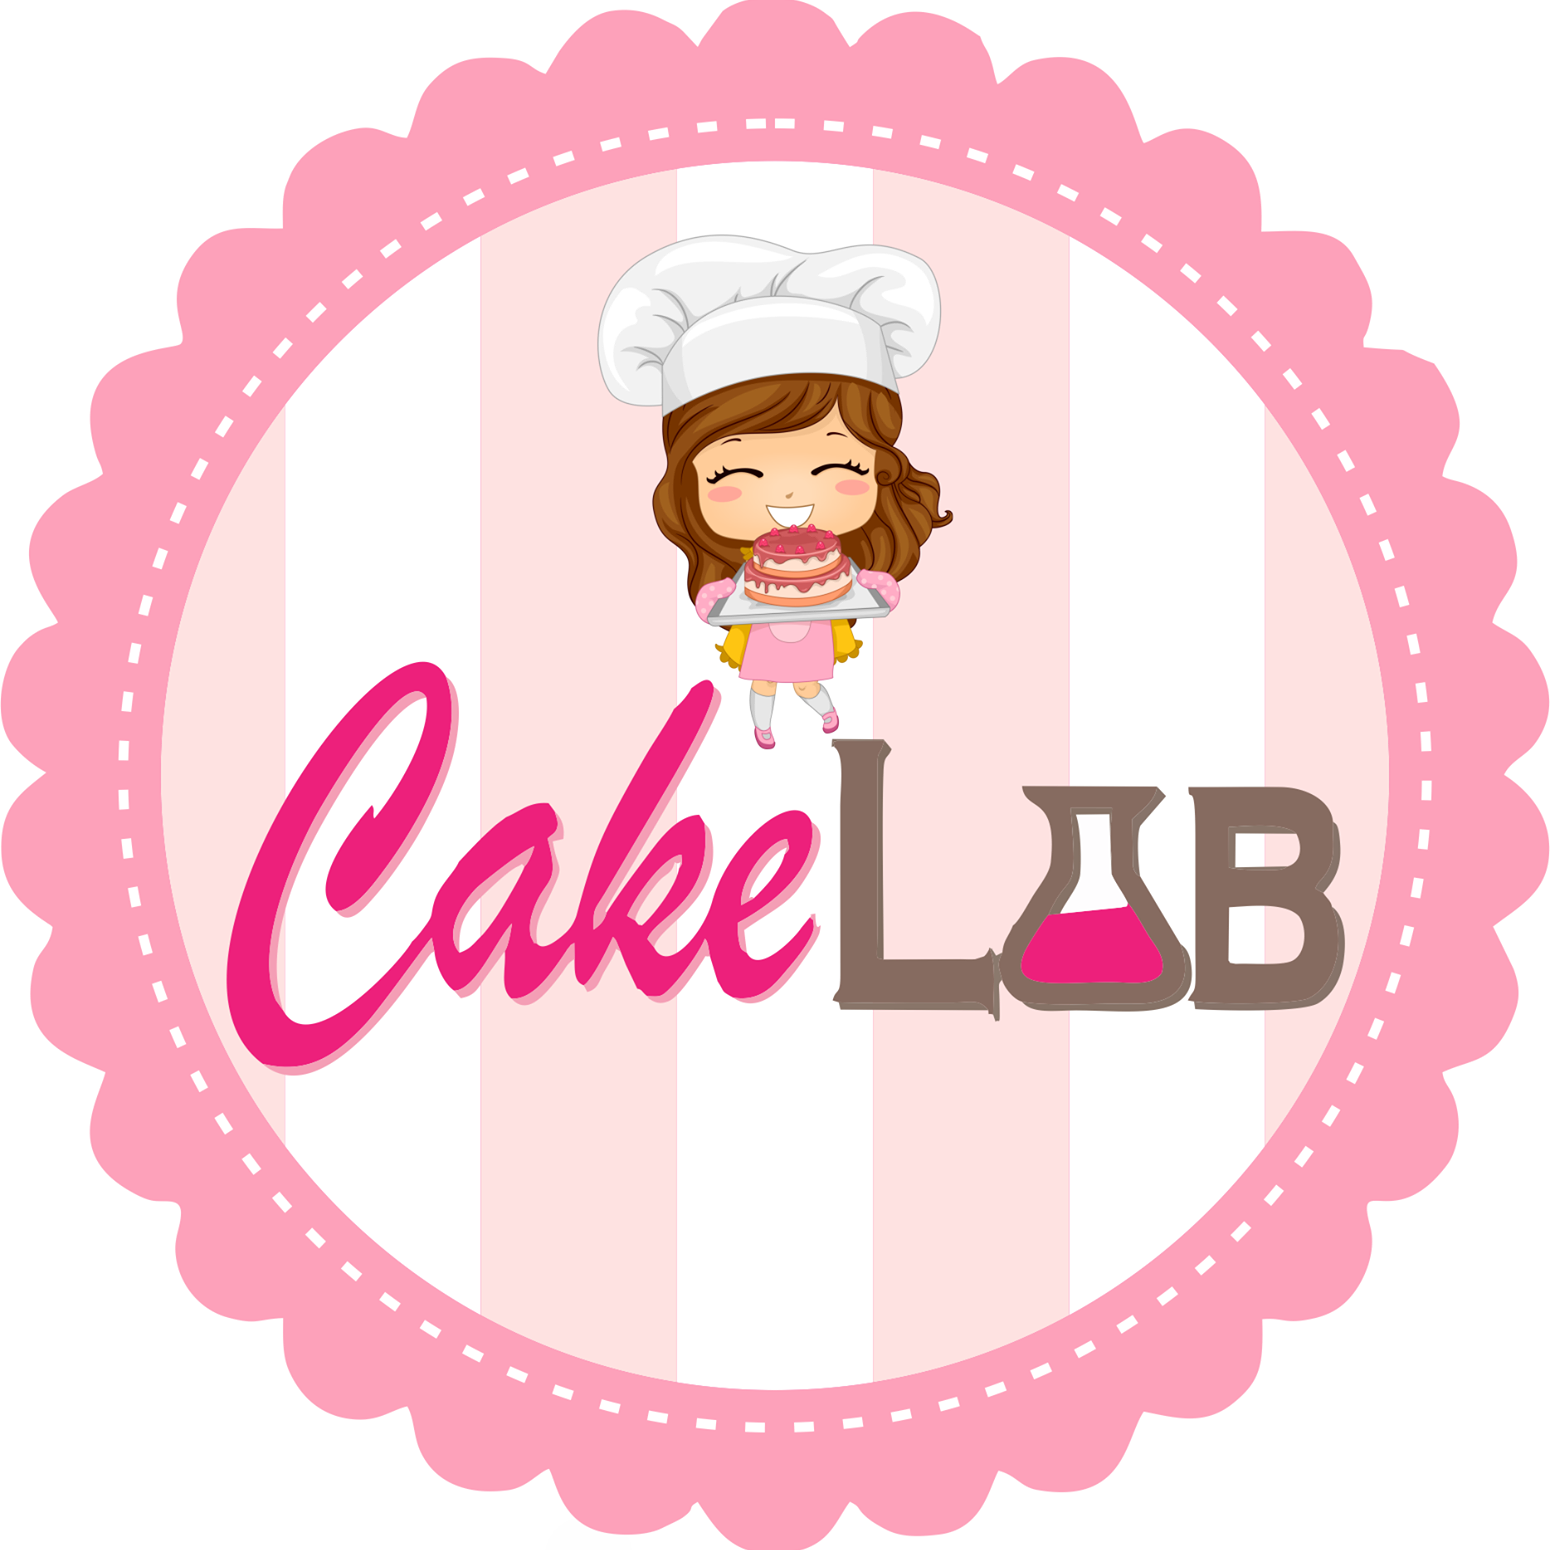 Cake Lab 1 PROFILE